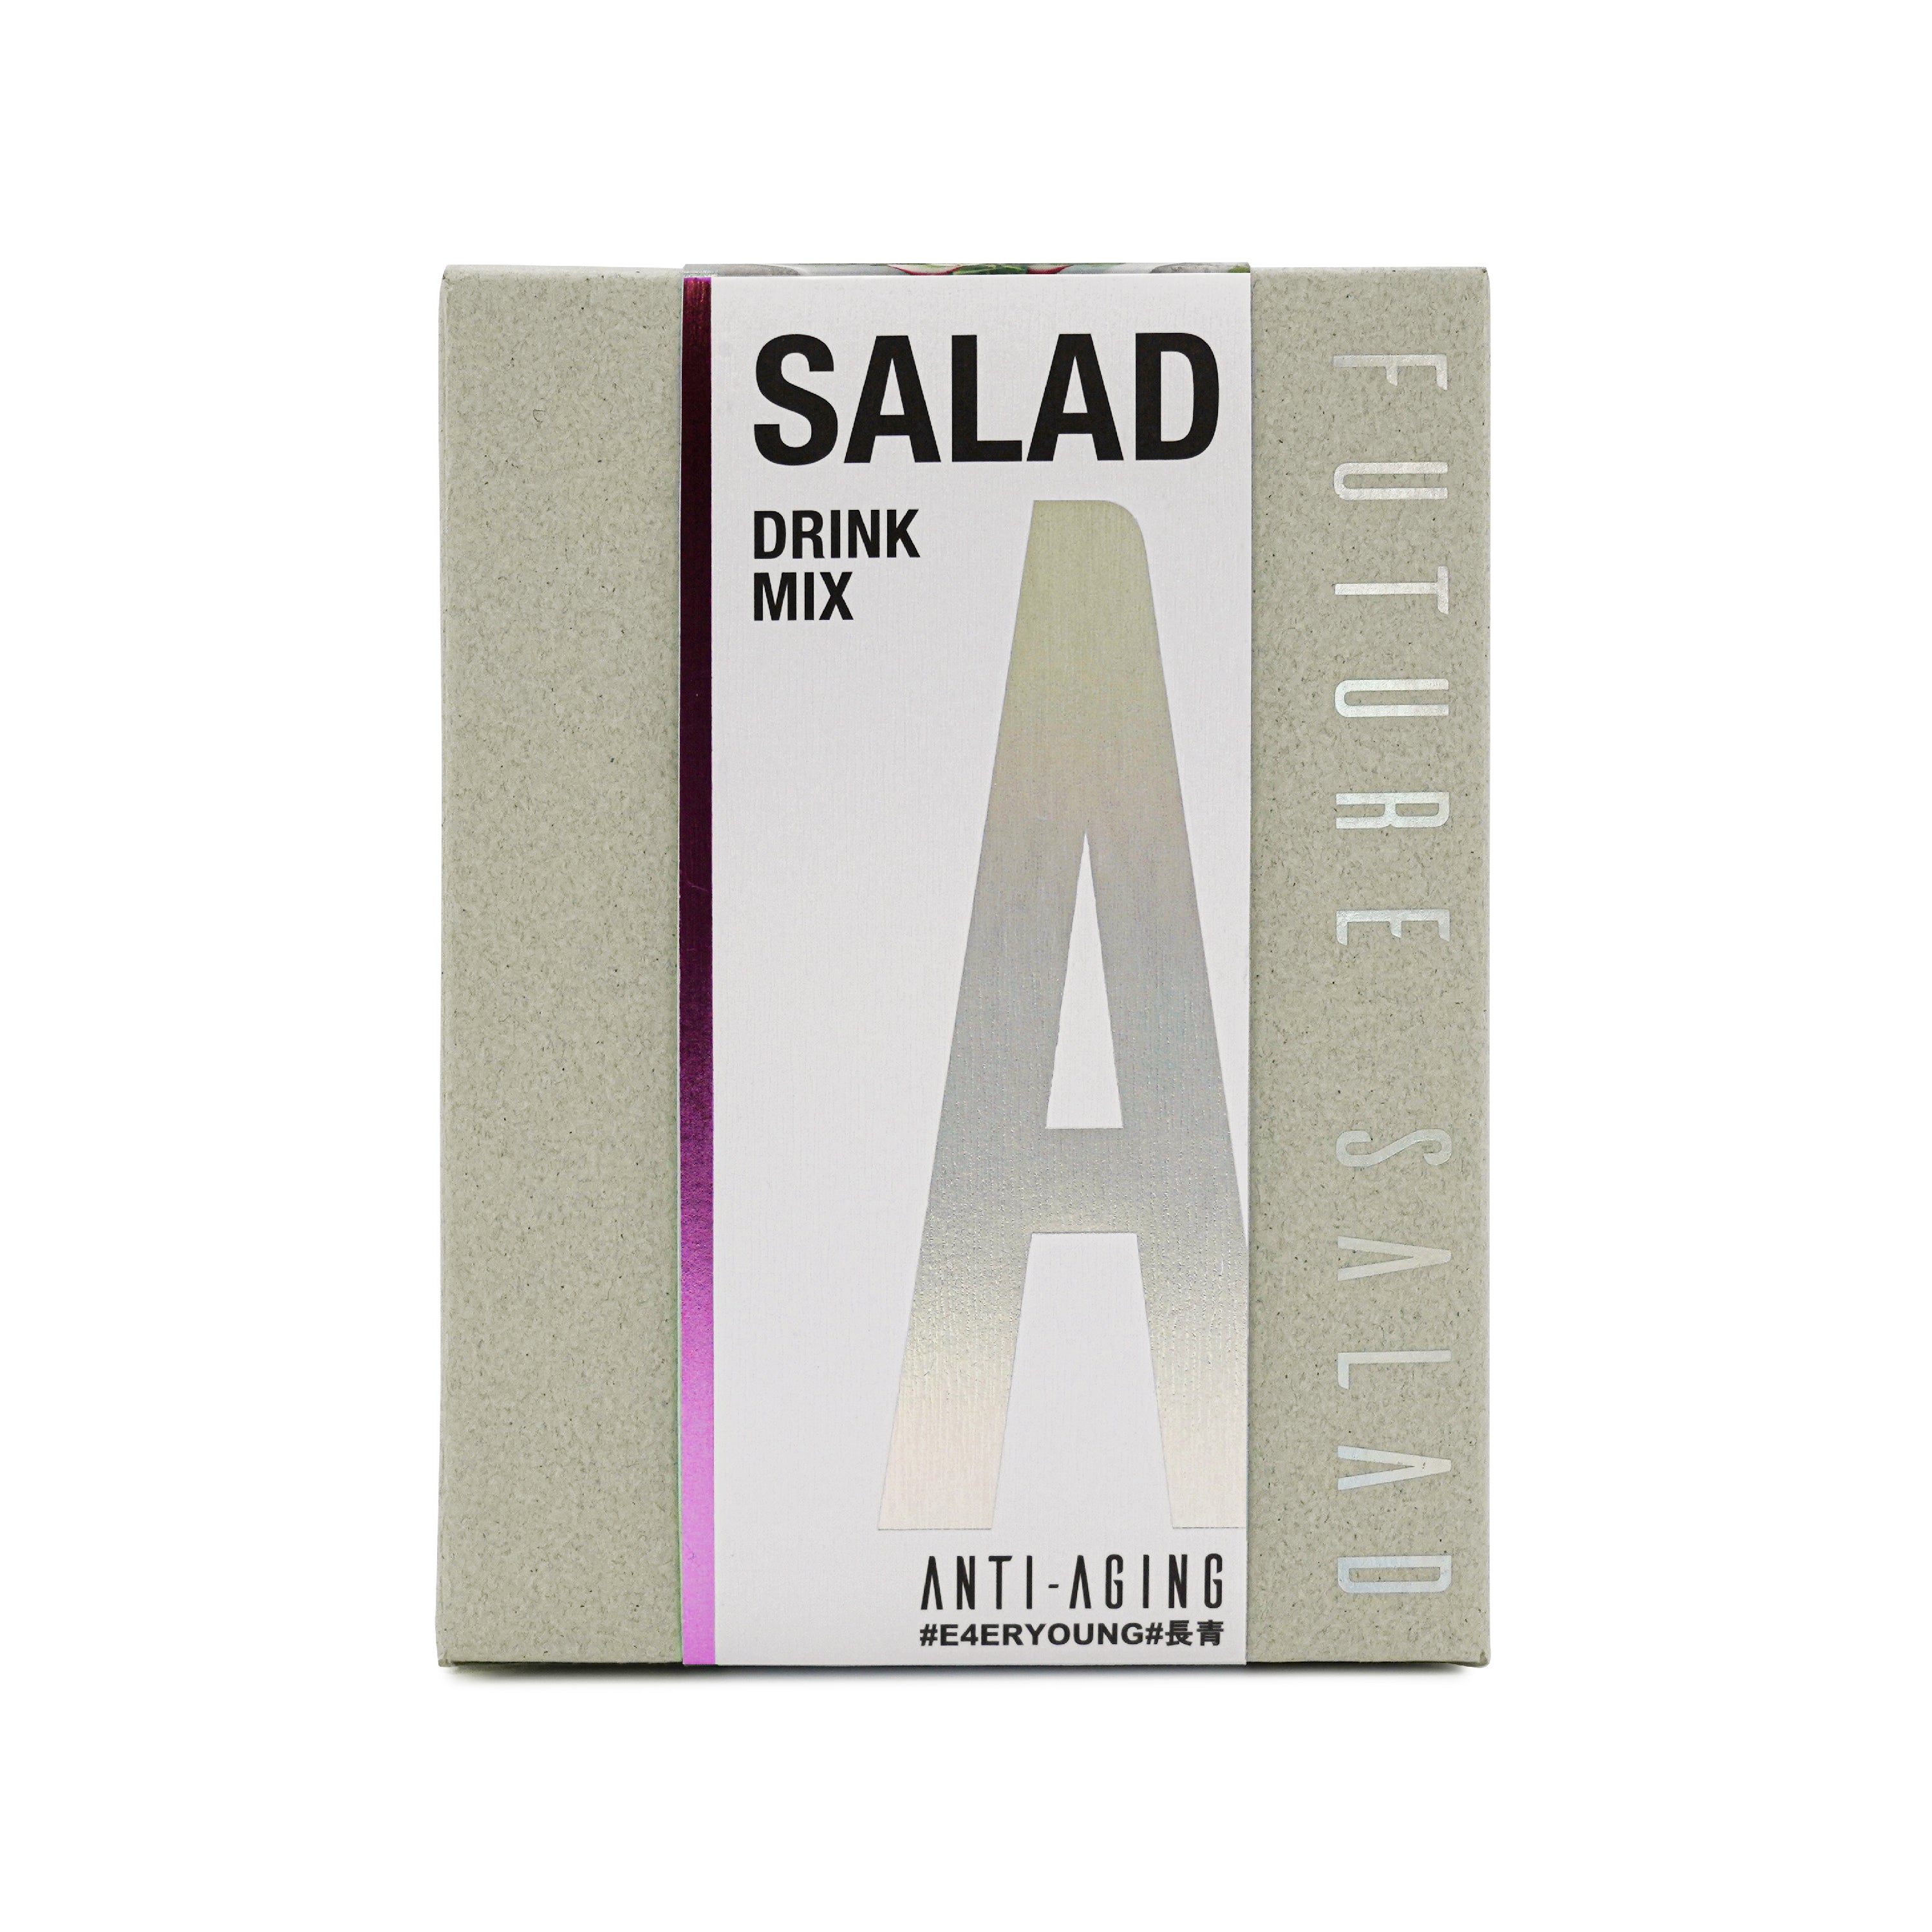 凍齡新沙律 Anti-Aging Salad Drink Mix 30包裝 | Salad Drink Mix | Future Salad